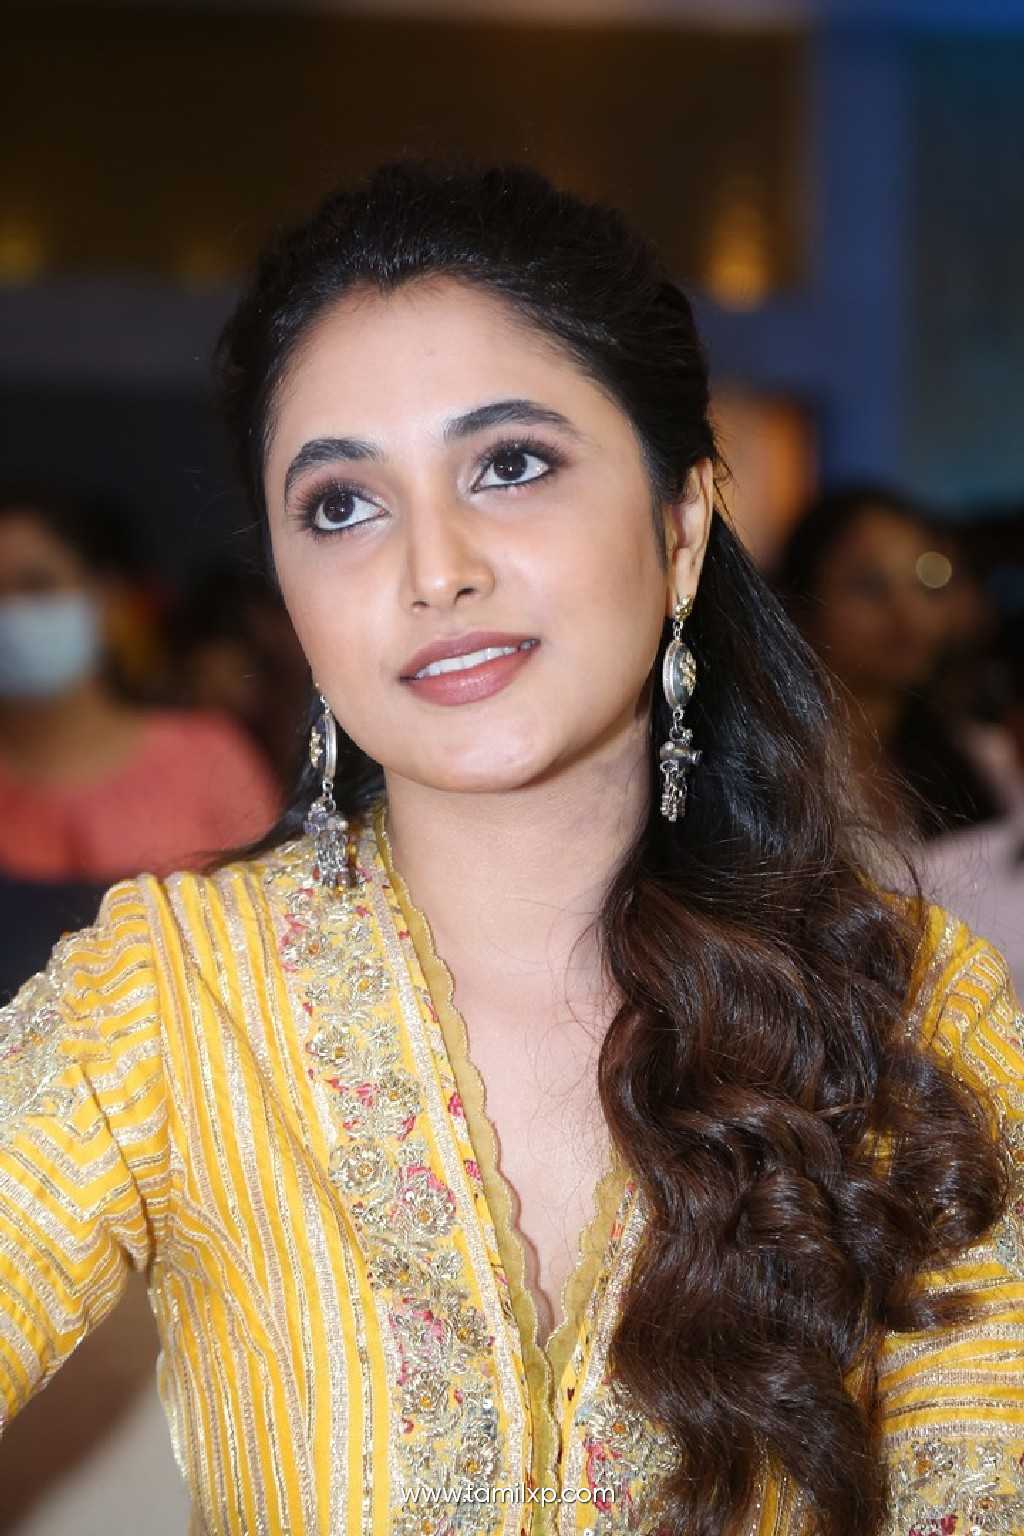 Telugu Actress Priyanka Arul Mohan